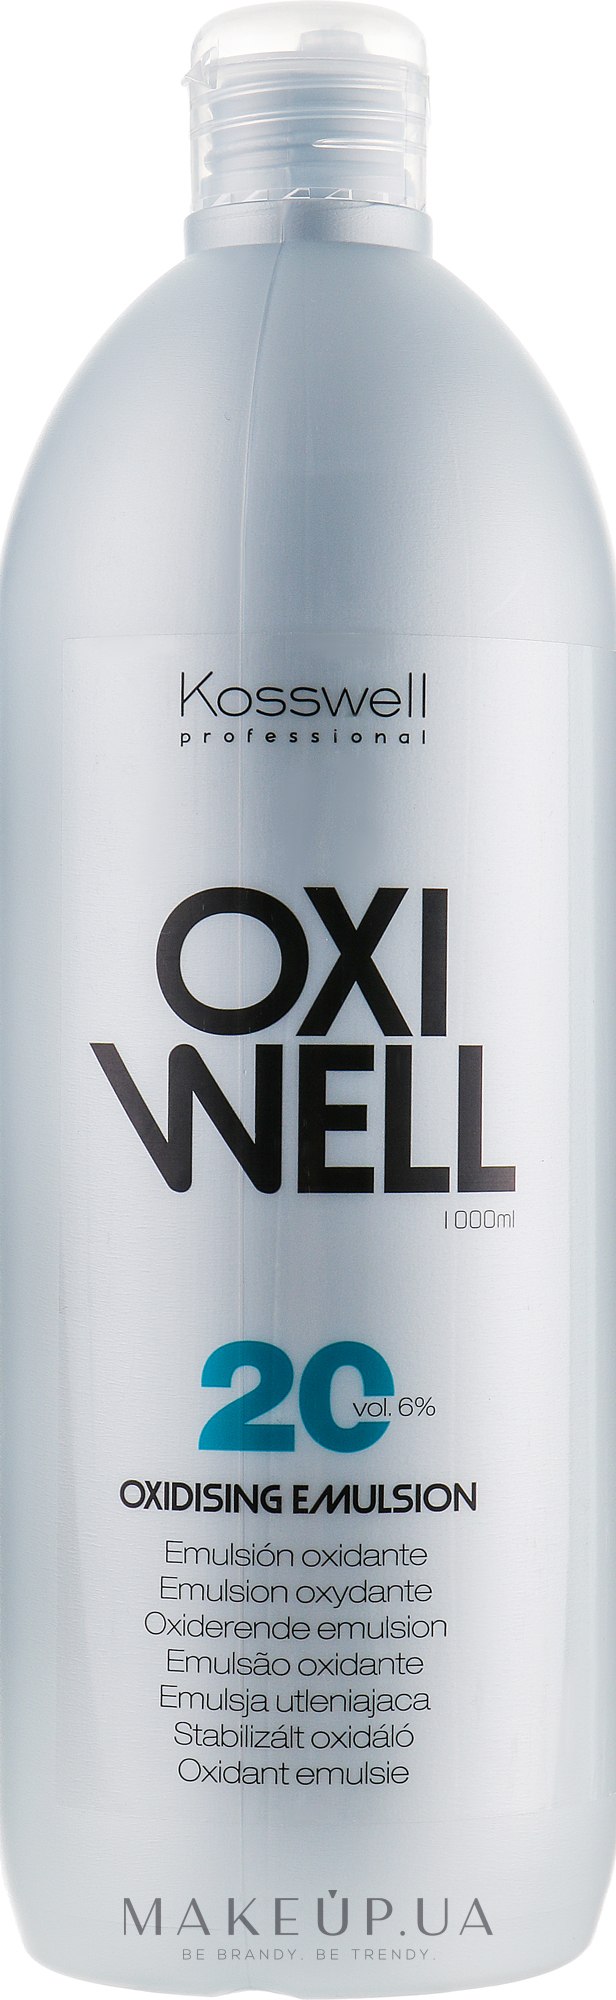 Окислювальна емульсія, 6% - Kosswell Equium Oxidizing Emulsion Oxiwell 6% 20 vol — фото 1000ml